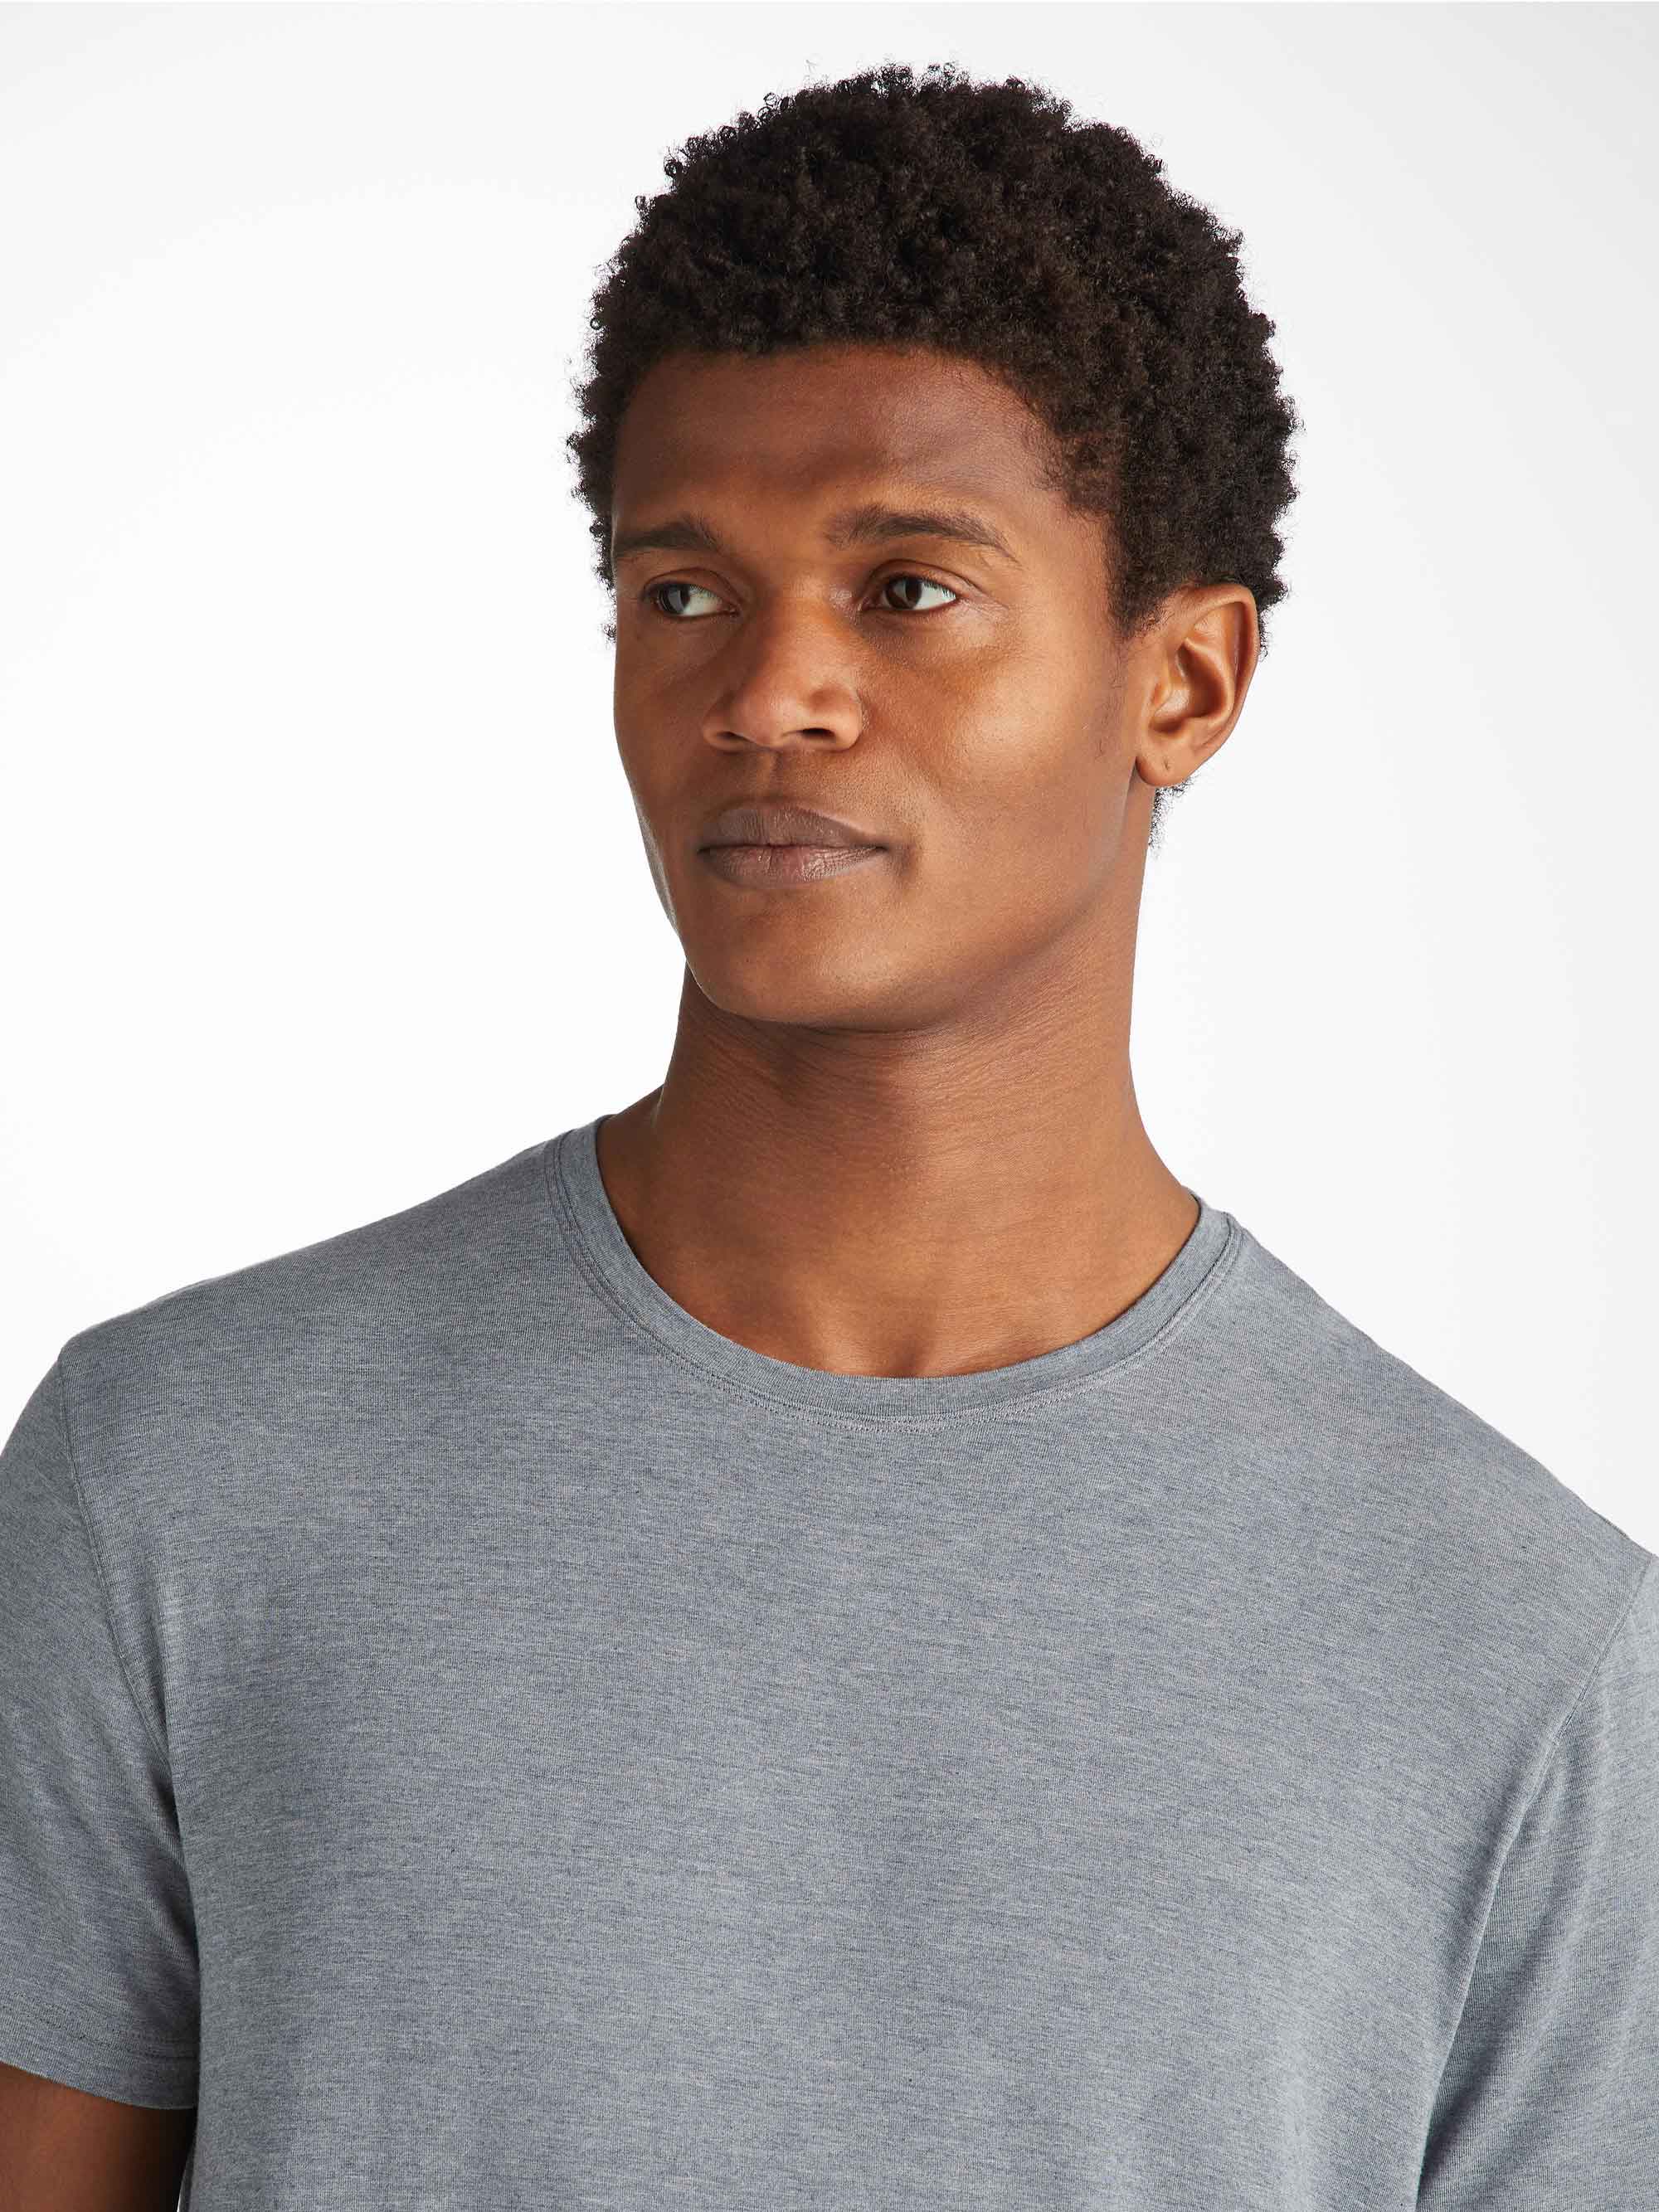 Men's T-Shirt Marlowe Micro Modal Stretch Charcoal